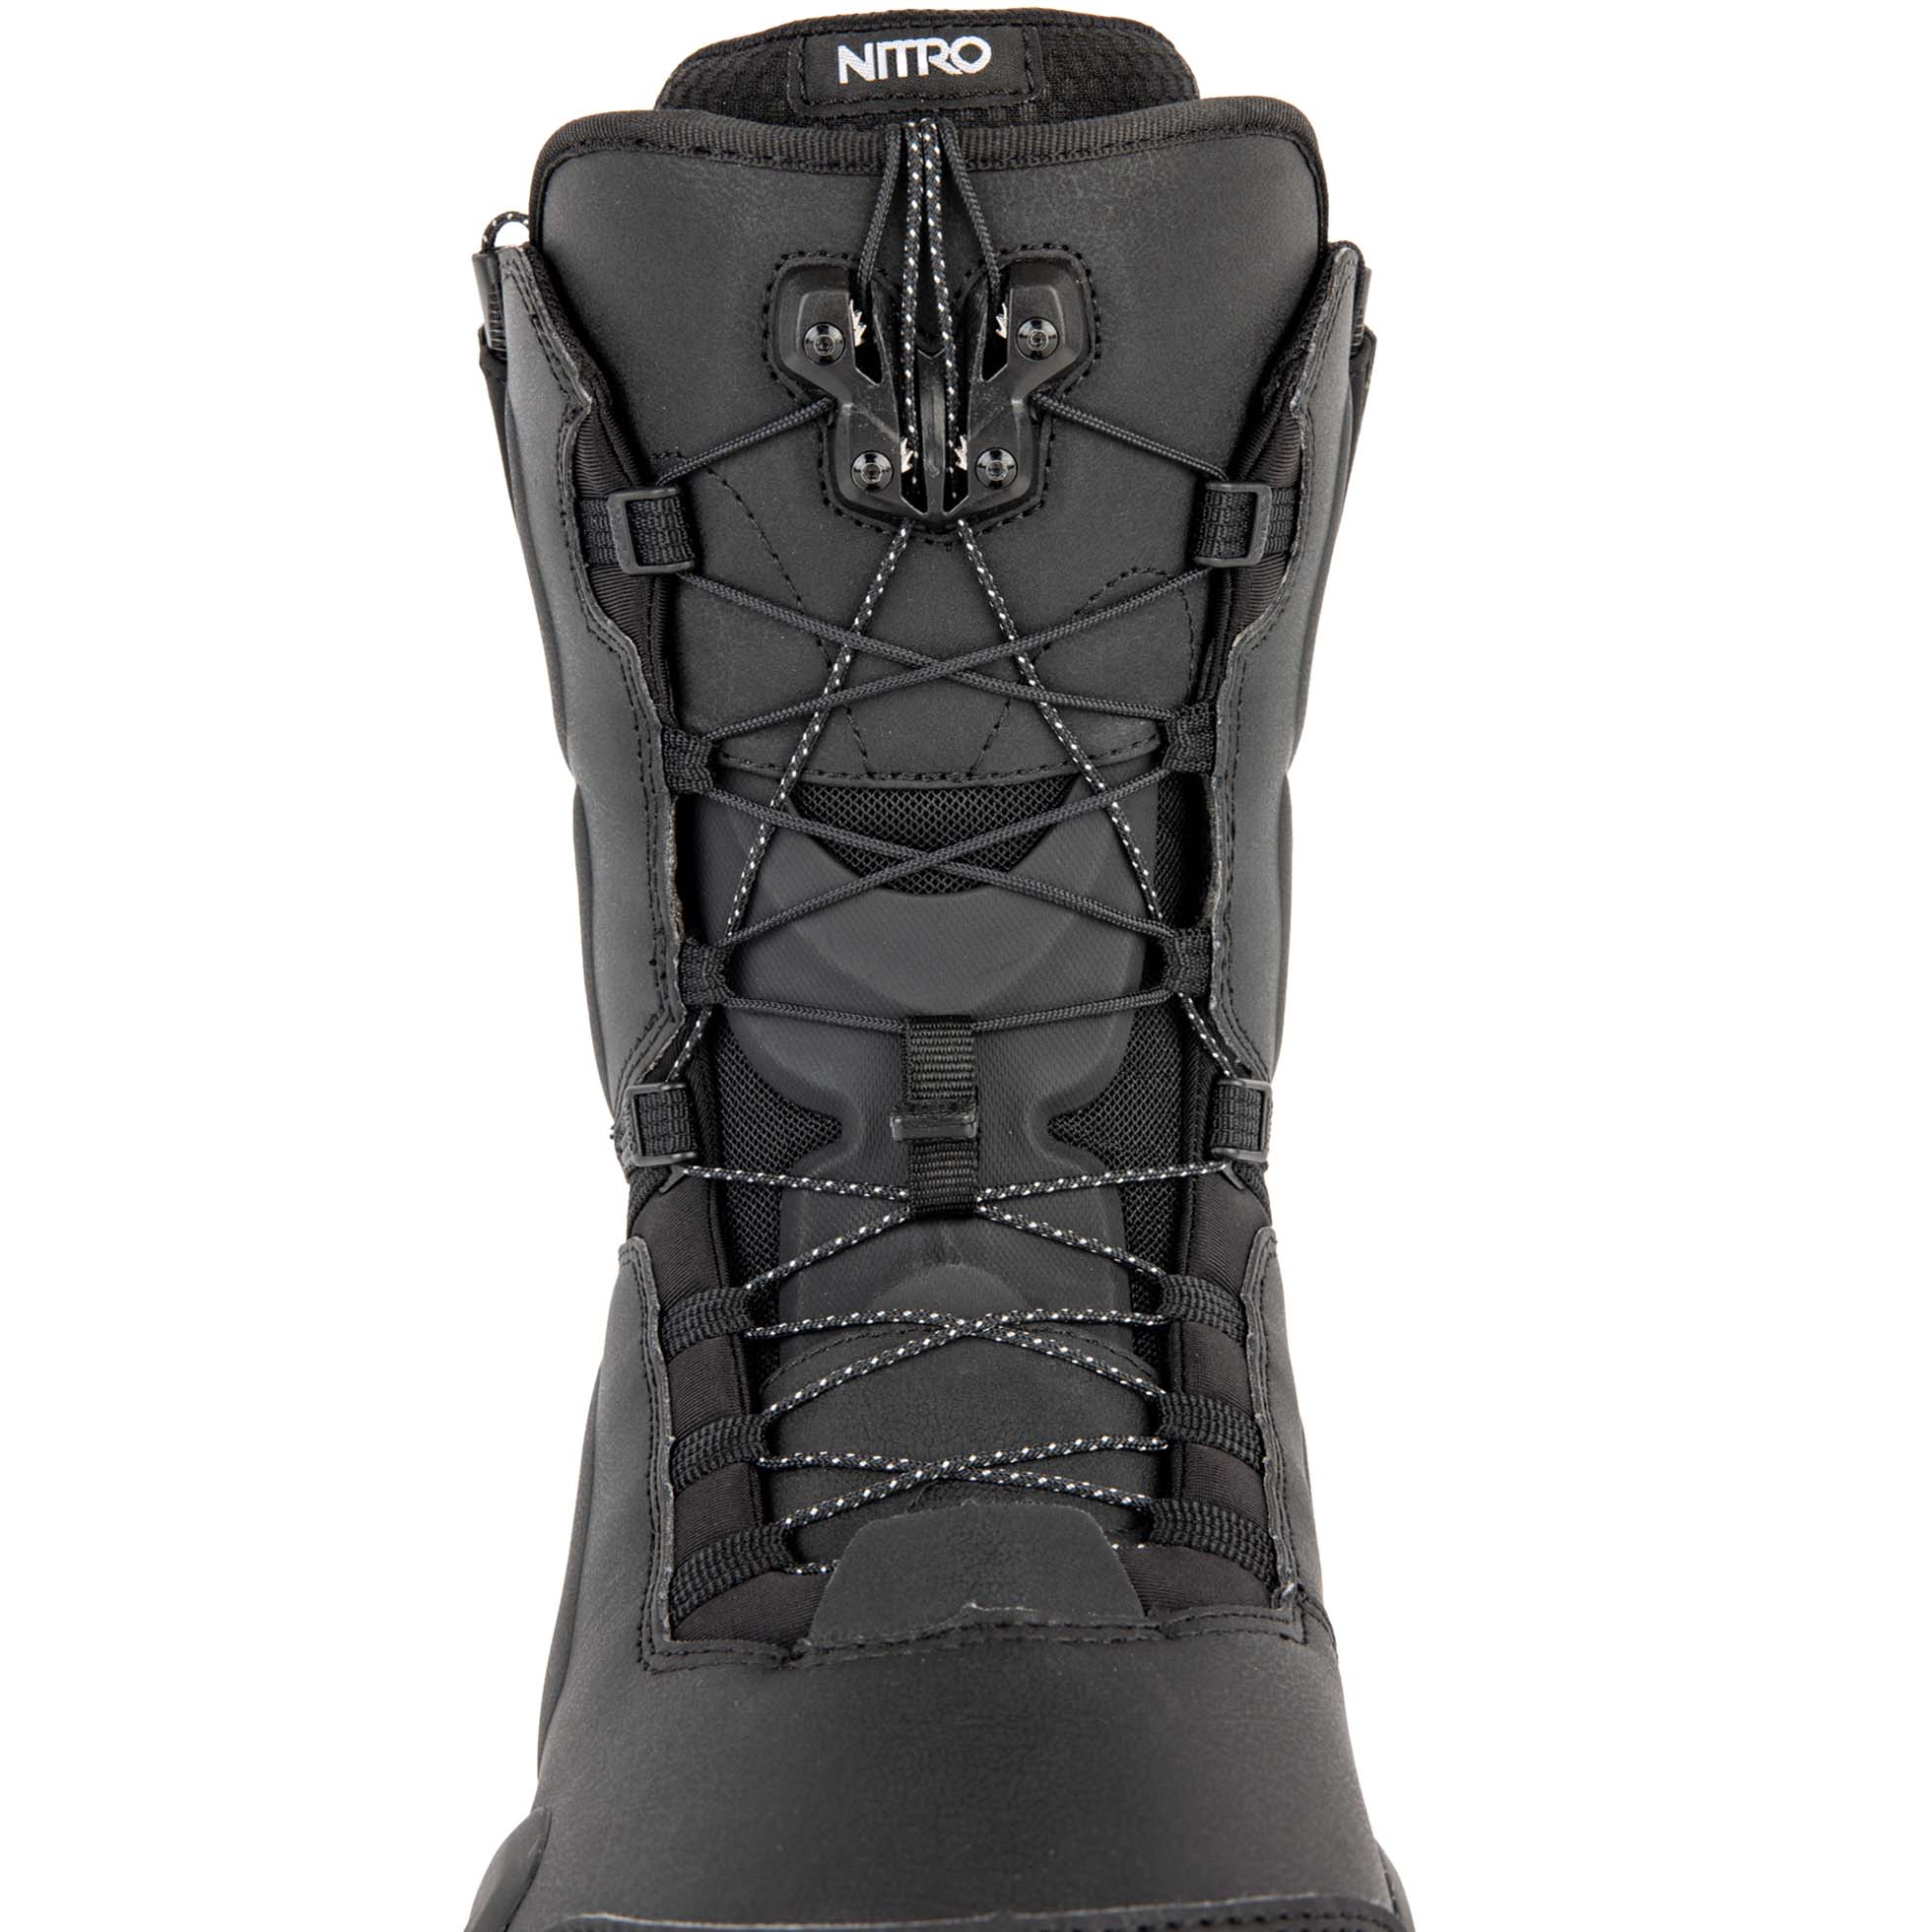 Nitro Profile TLS Step On Snowboard Boots